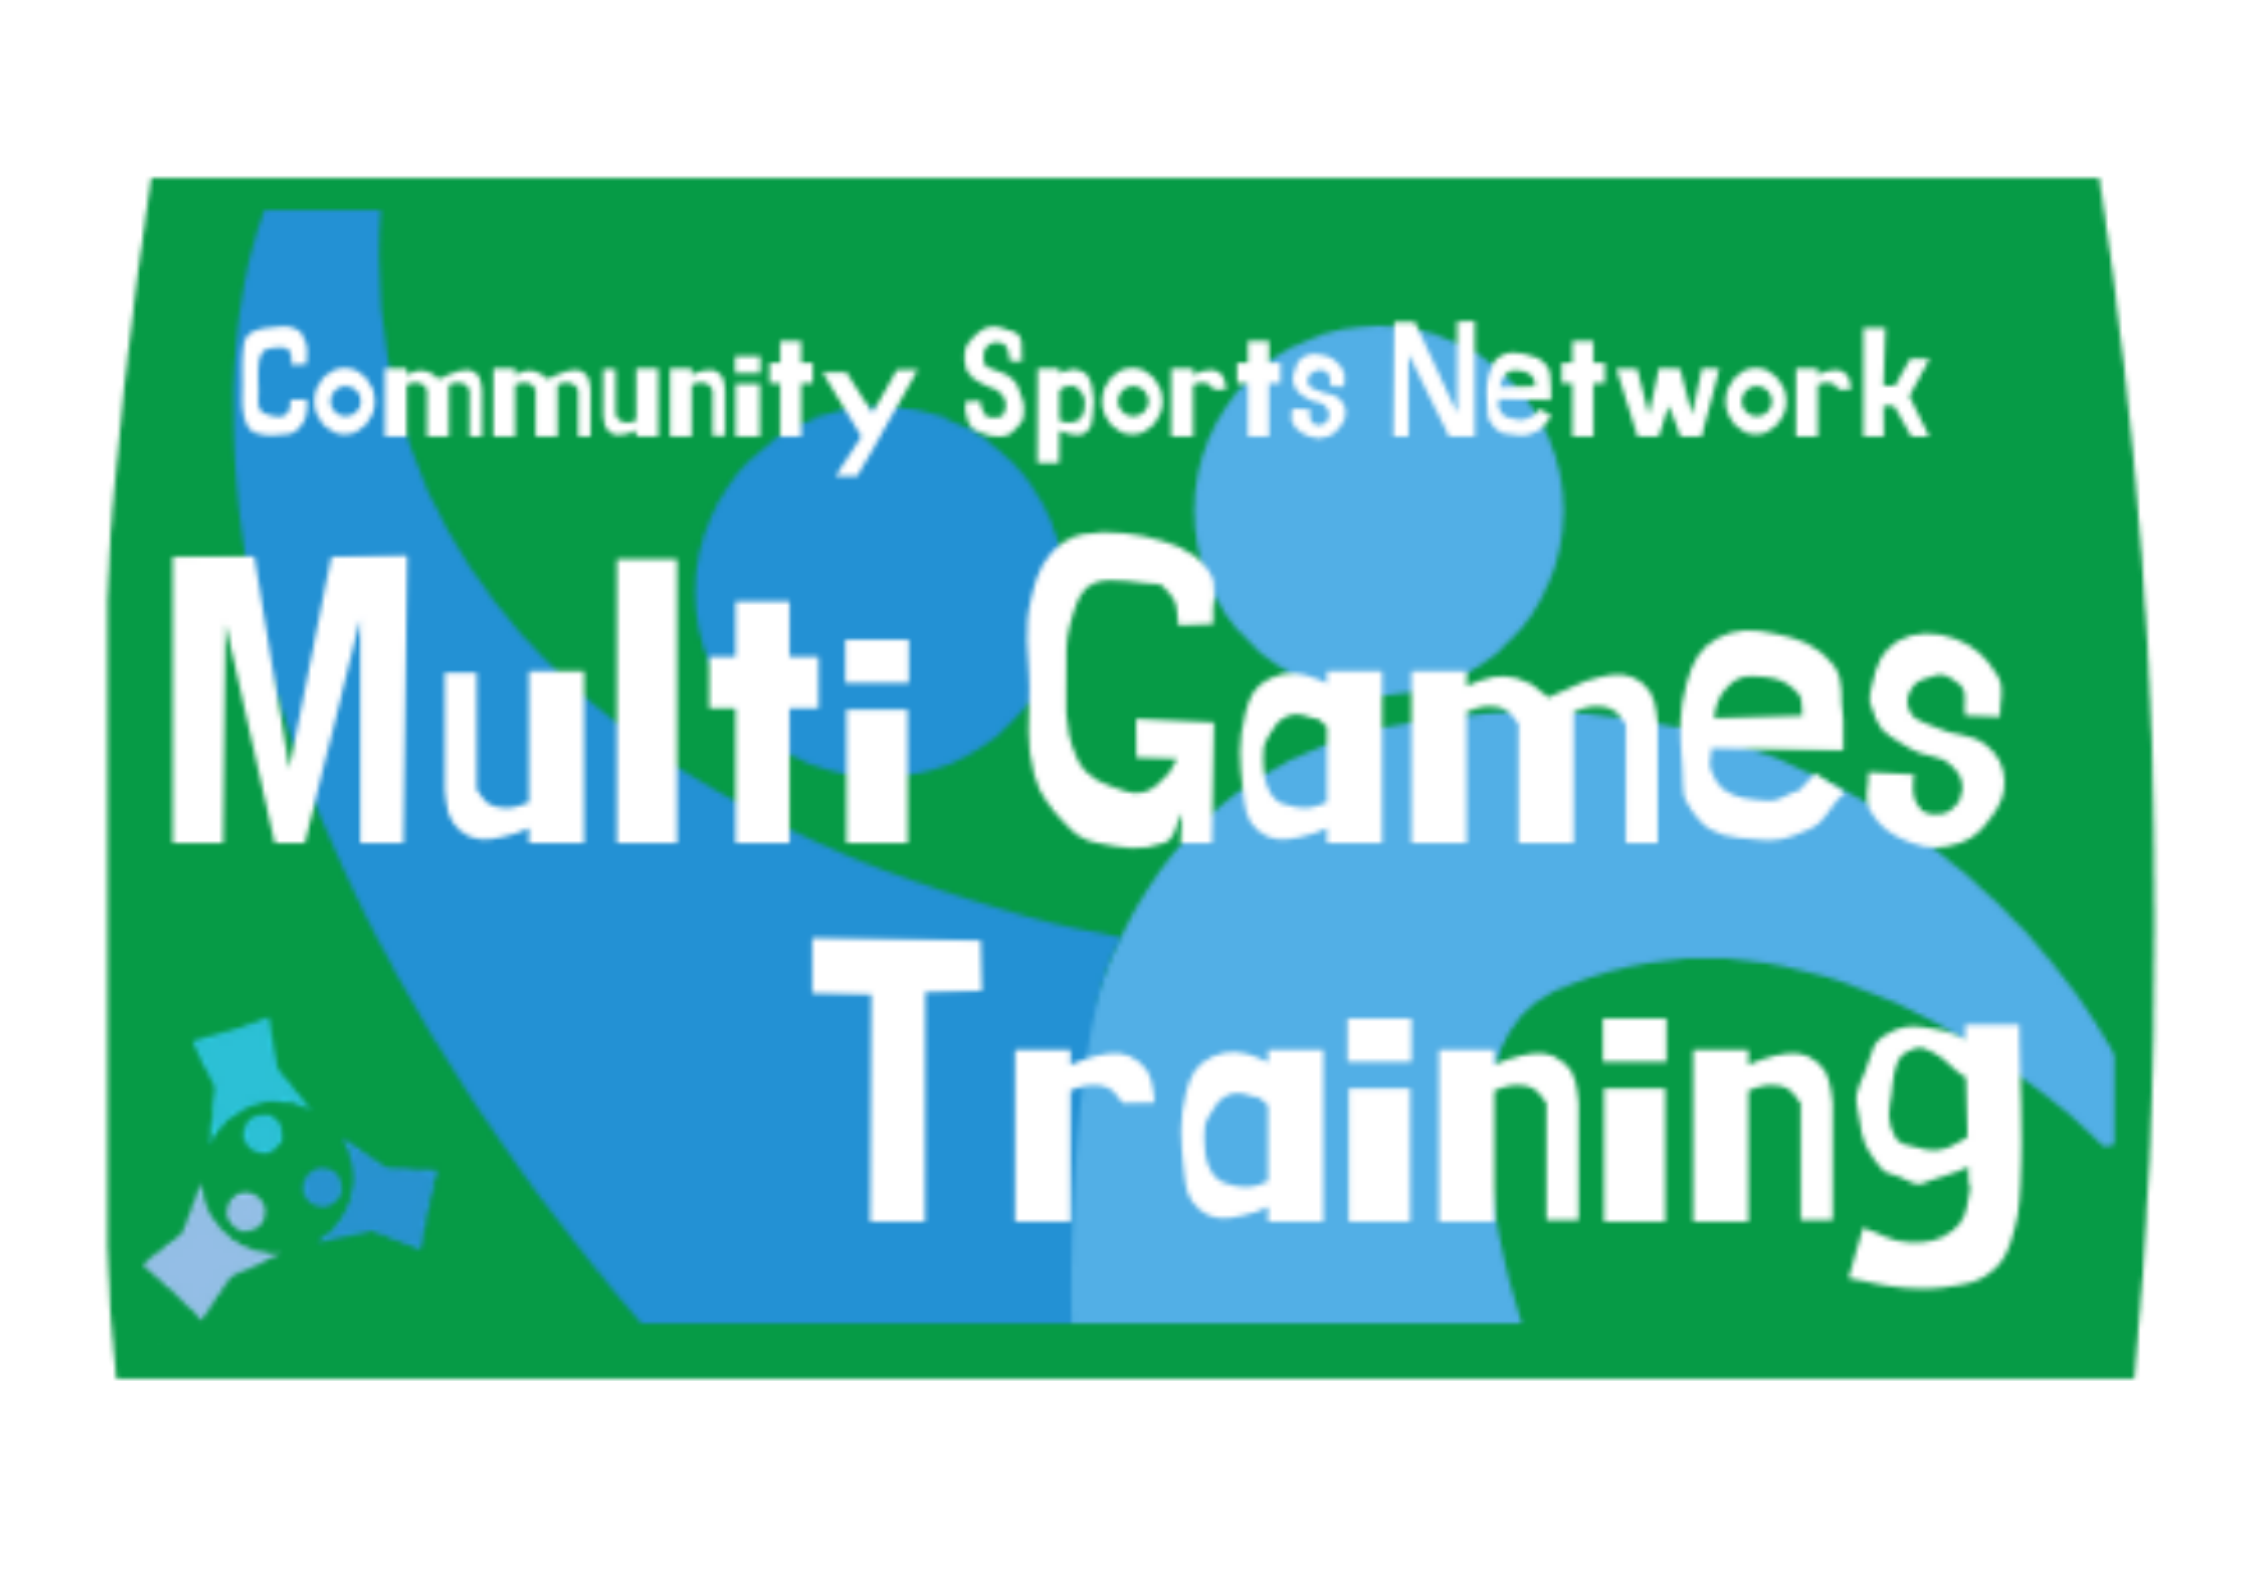 Multi Games Training Website Dimensions